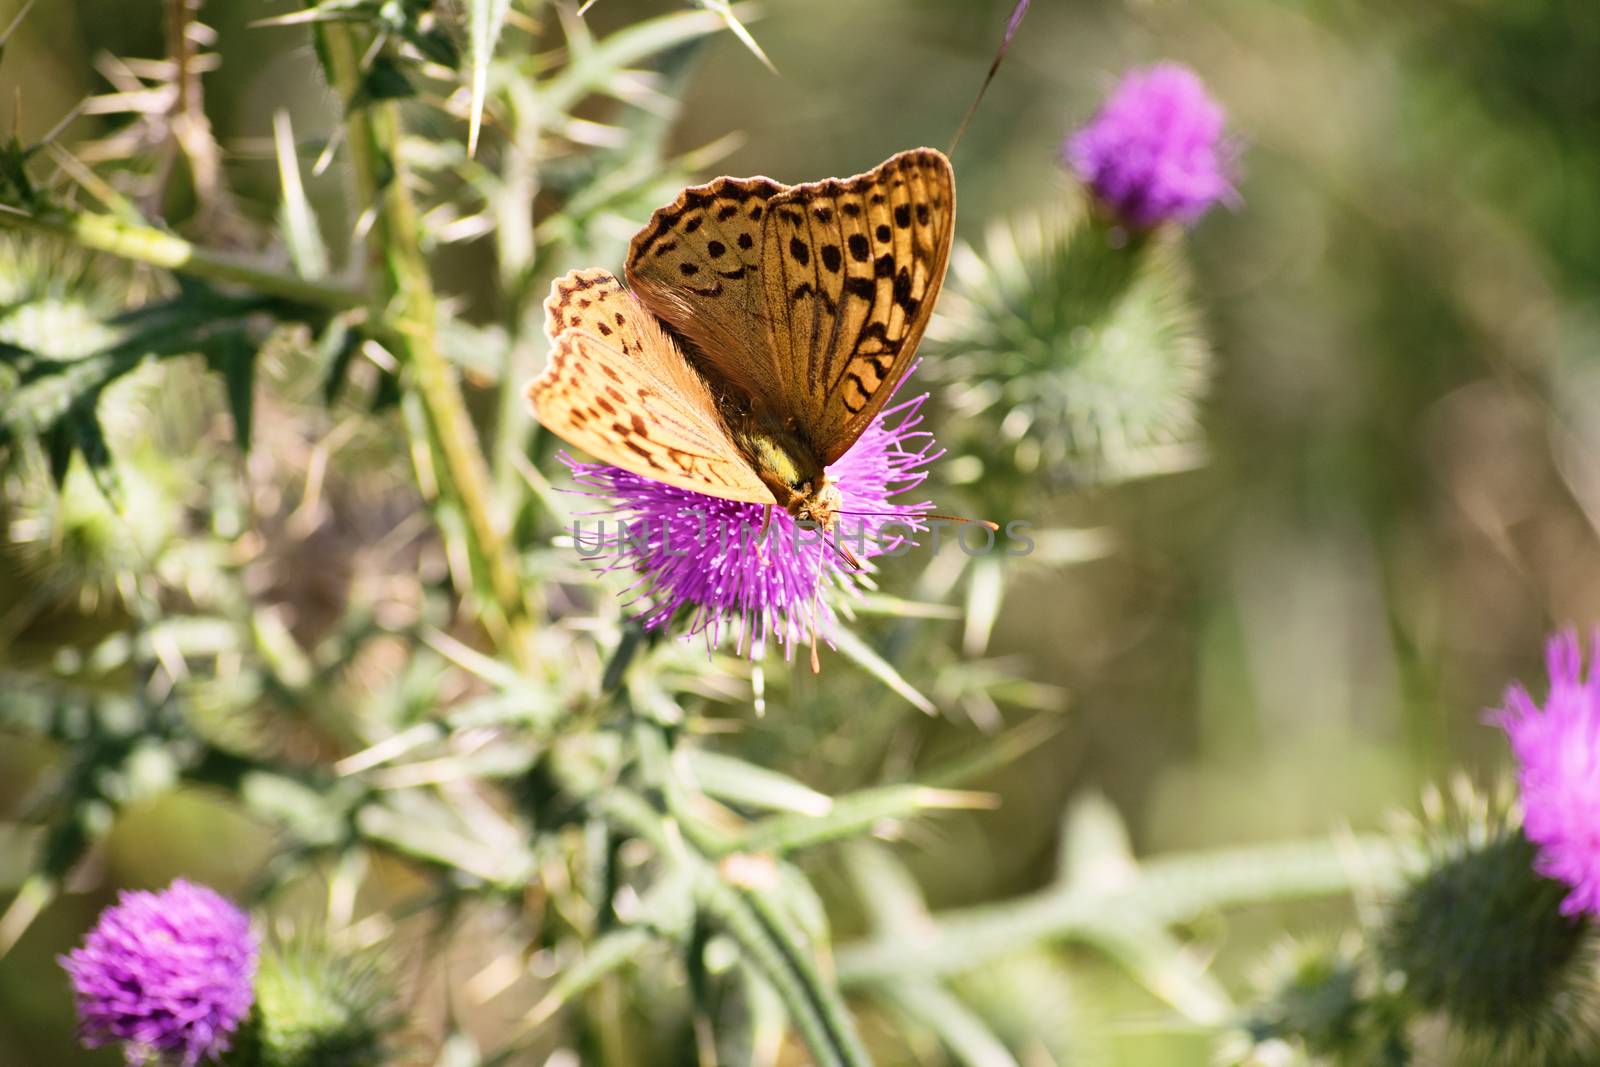 Butterfly on a flower by Mendelex